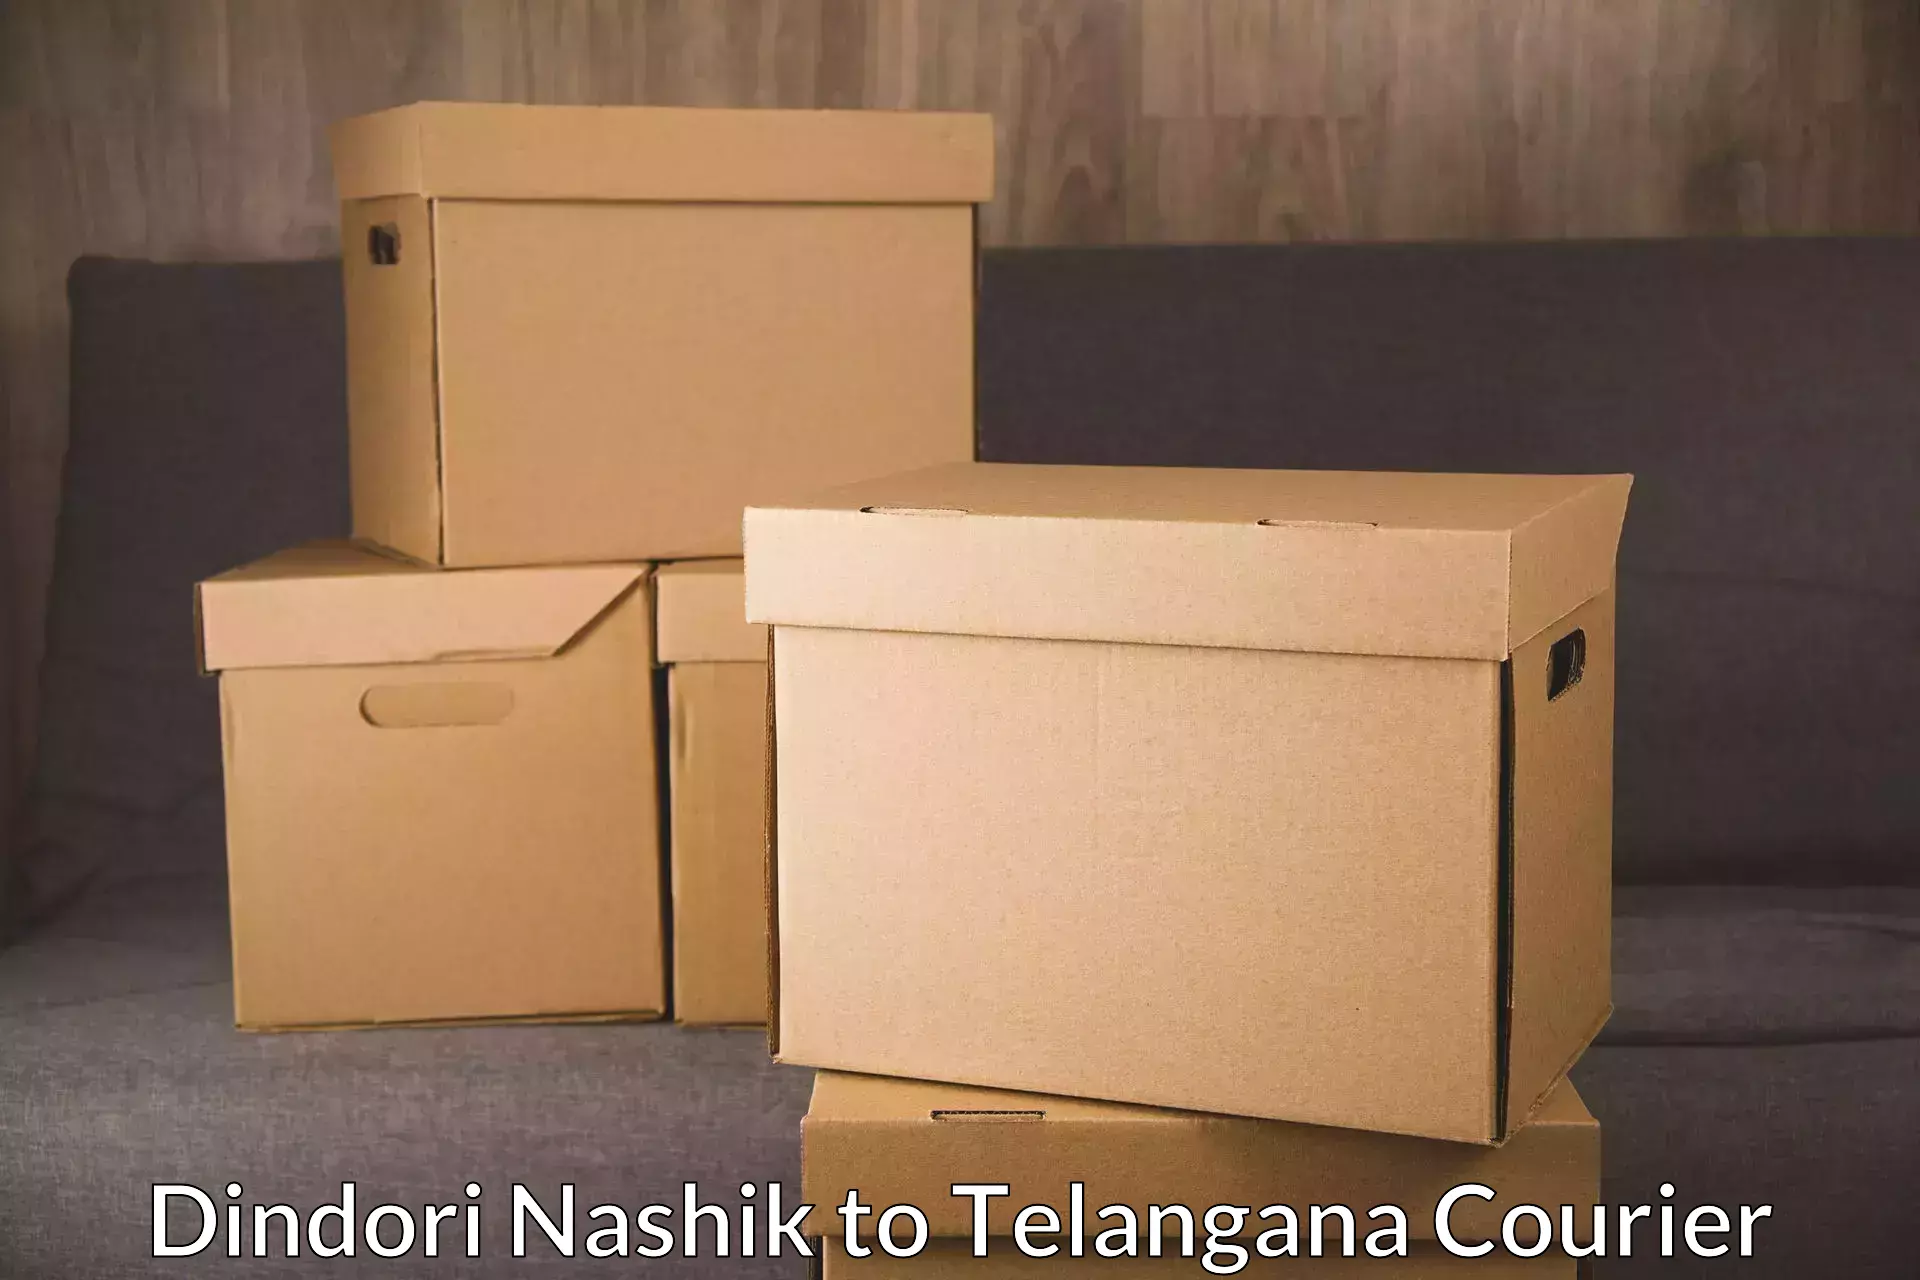 Courier service partnerships Dindori Nashik to Bhupalpally